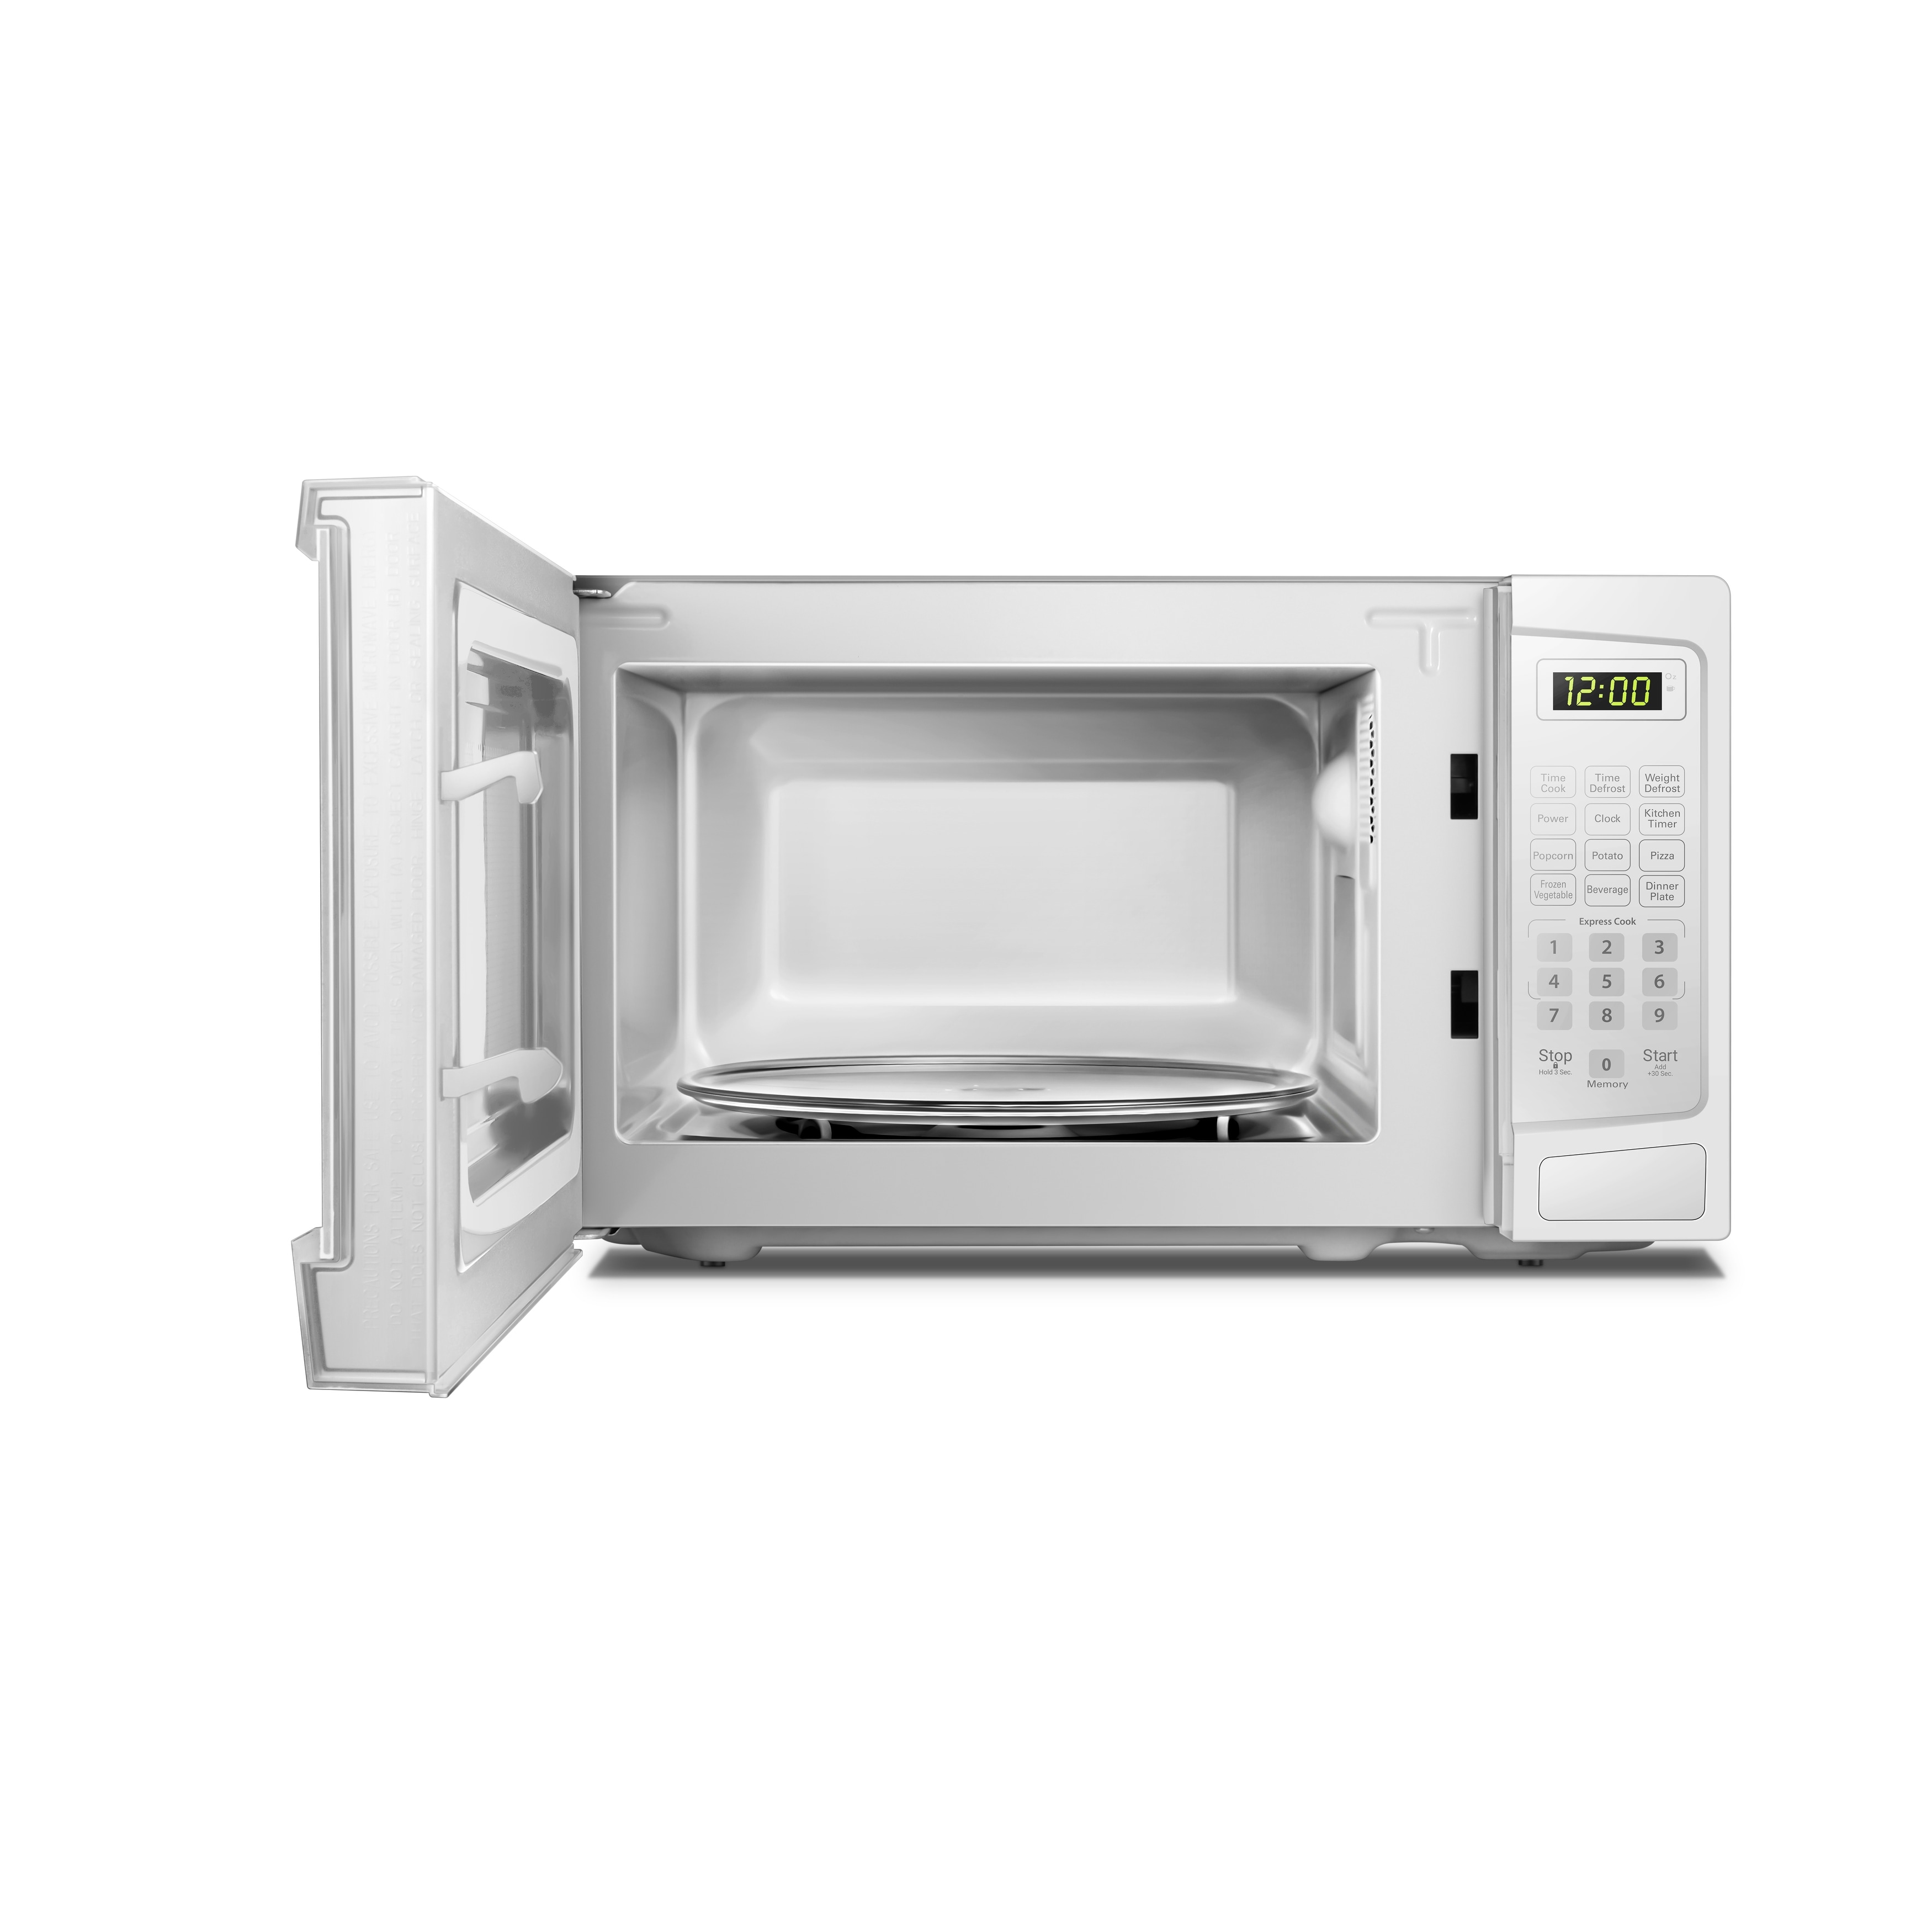 0.7 CU. FT. 700 Watt Countertop Microwave Oven, White